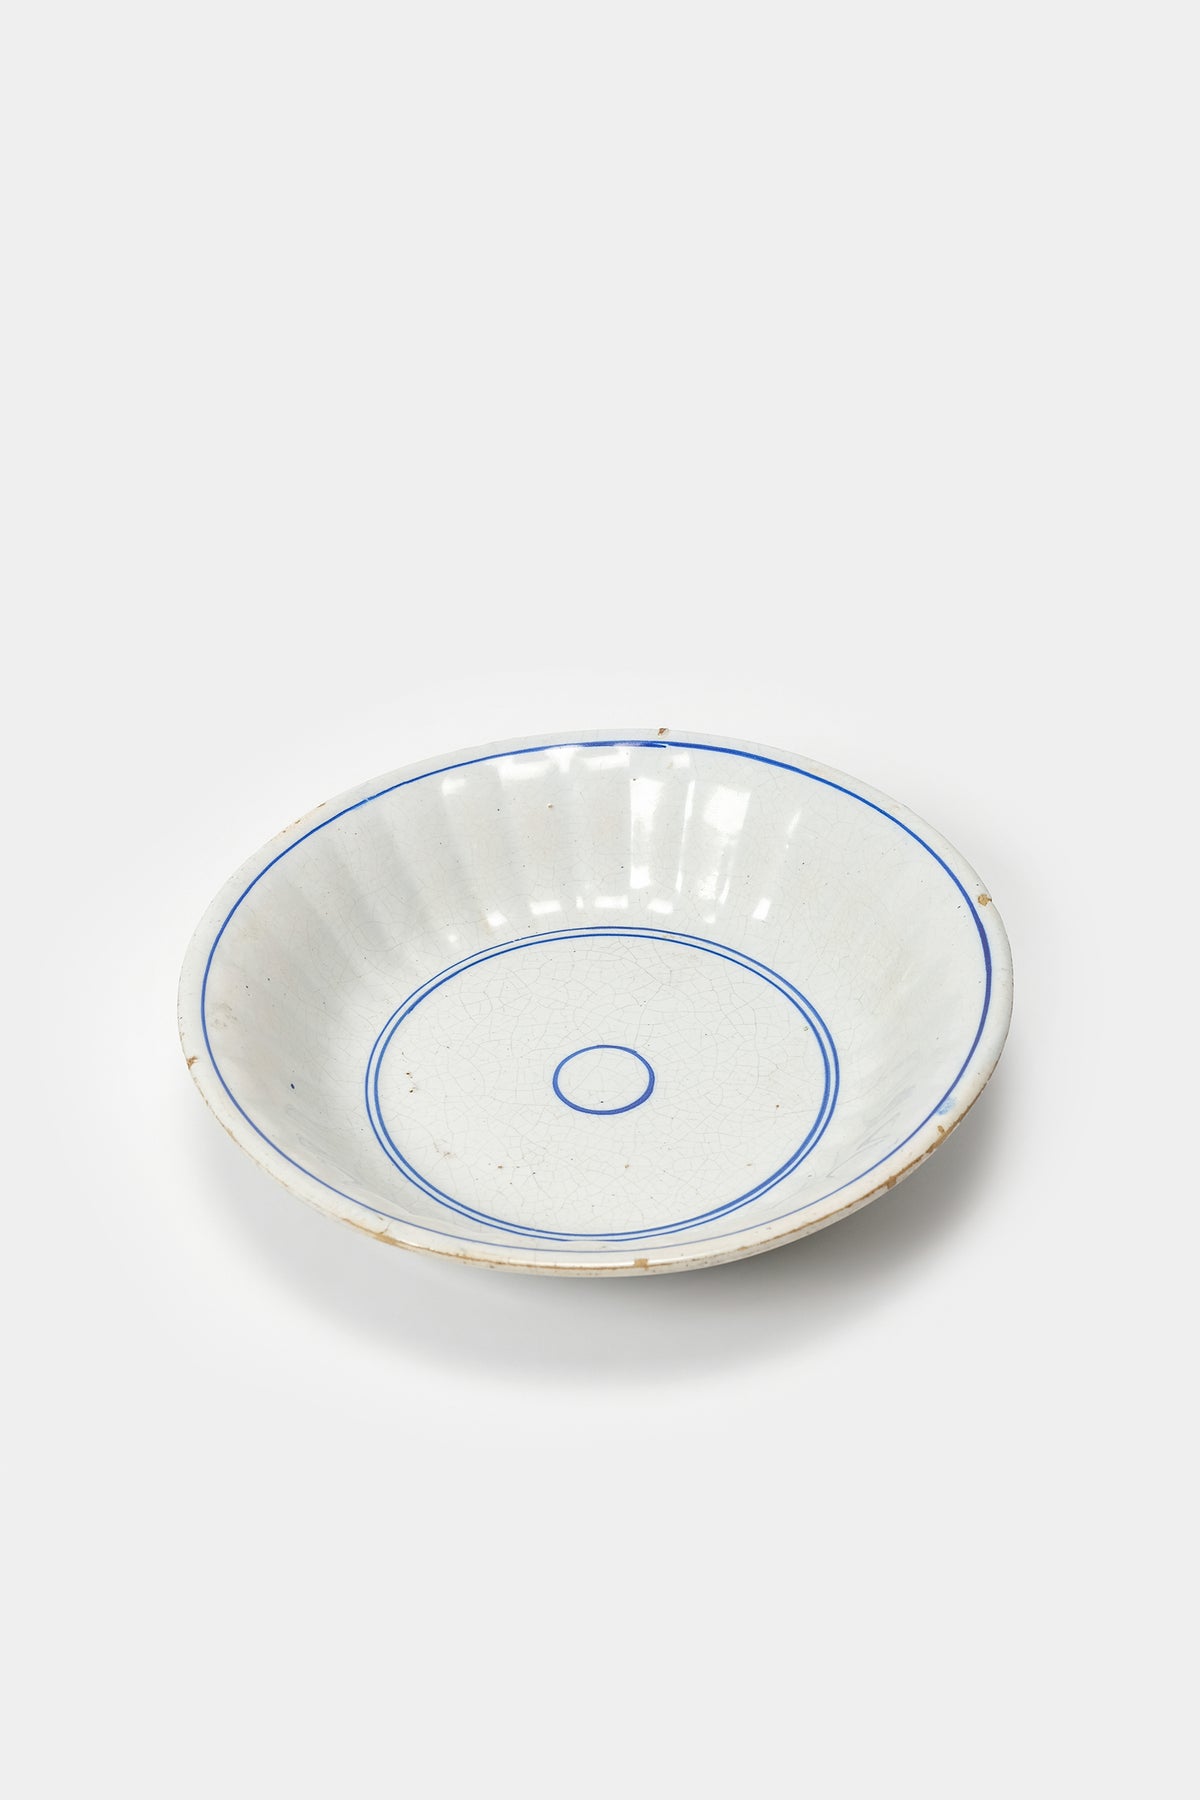 Plate, Manises Valencia Keramik, 20s